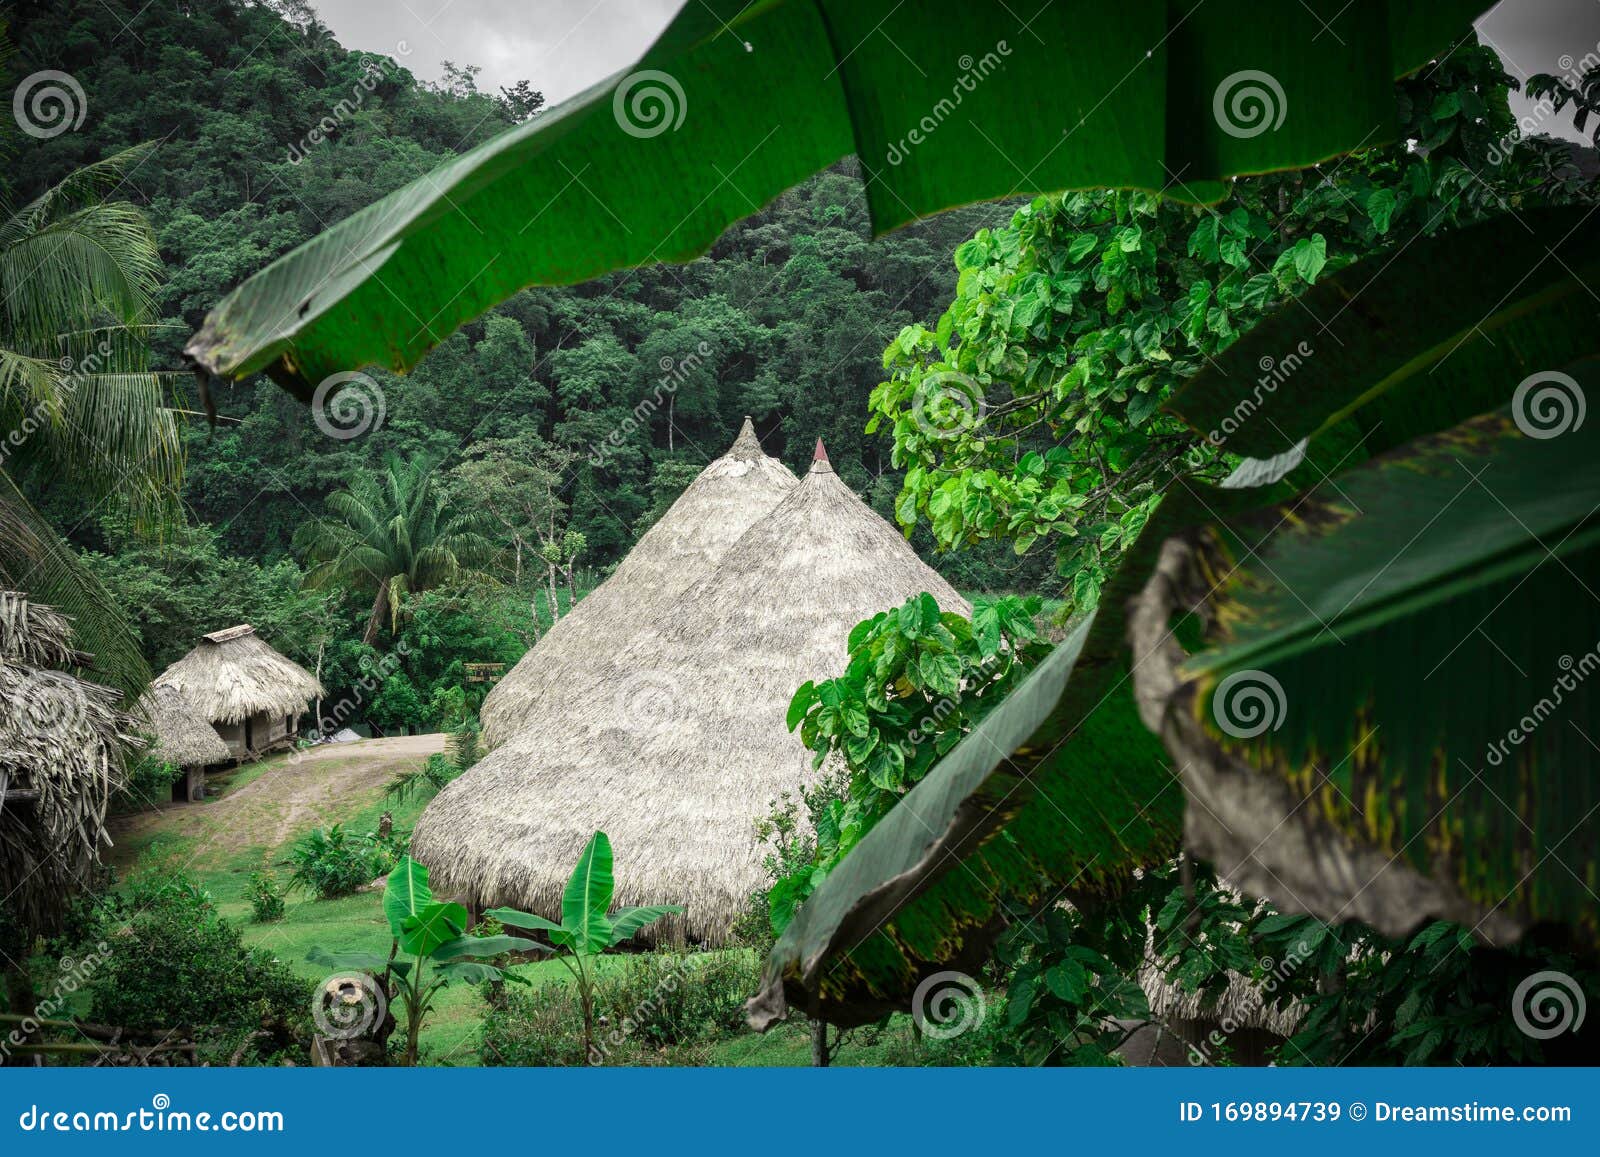 beautiful embera village in panama.